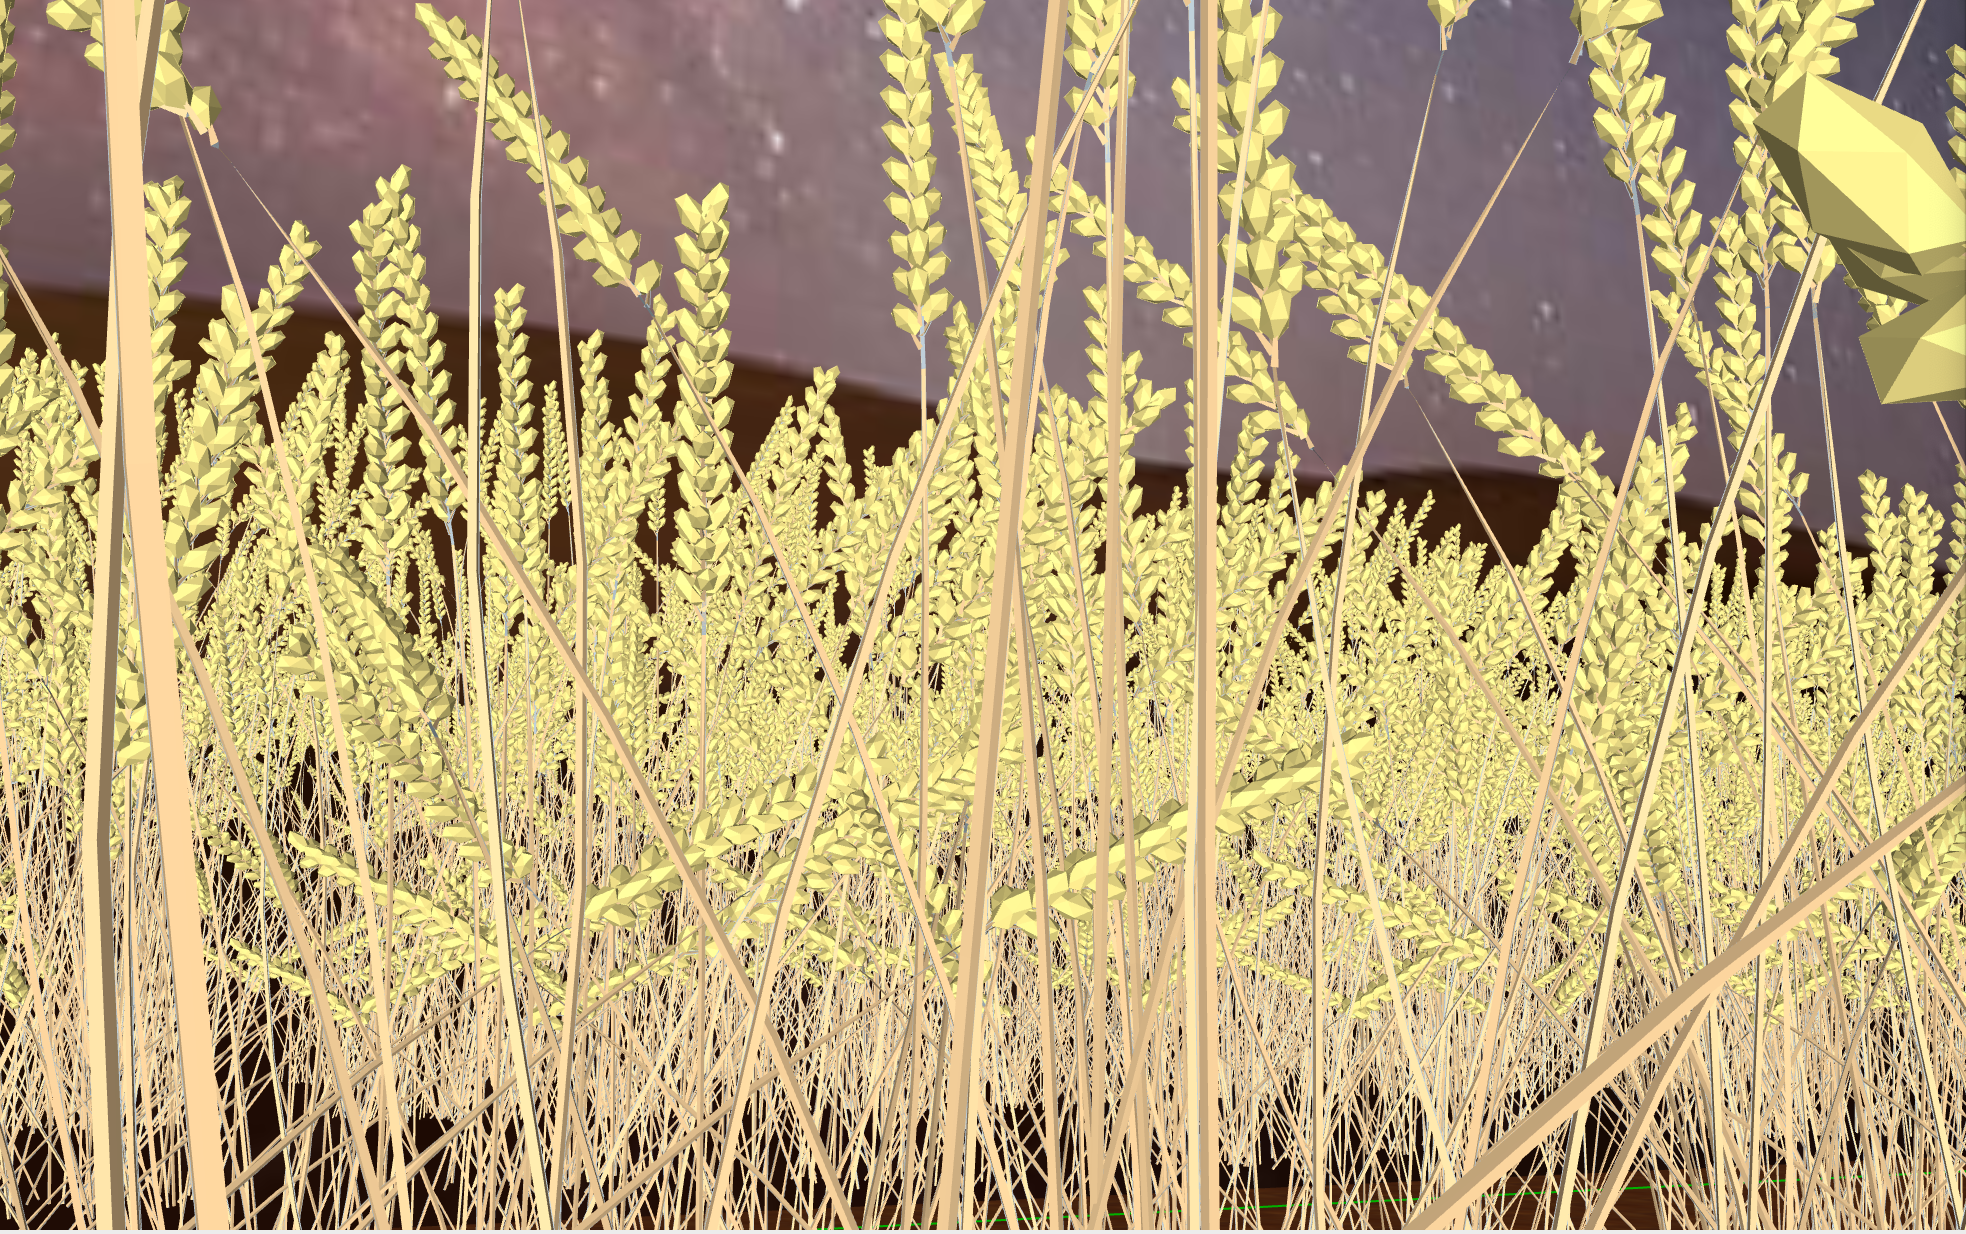 golden sheaves of wheat in a field